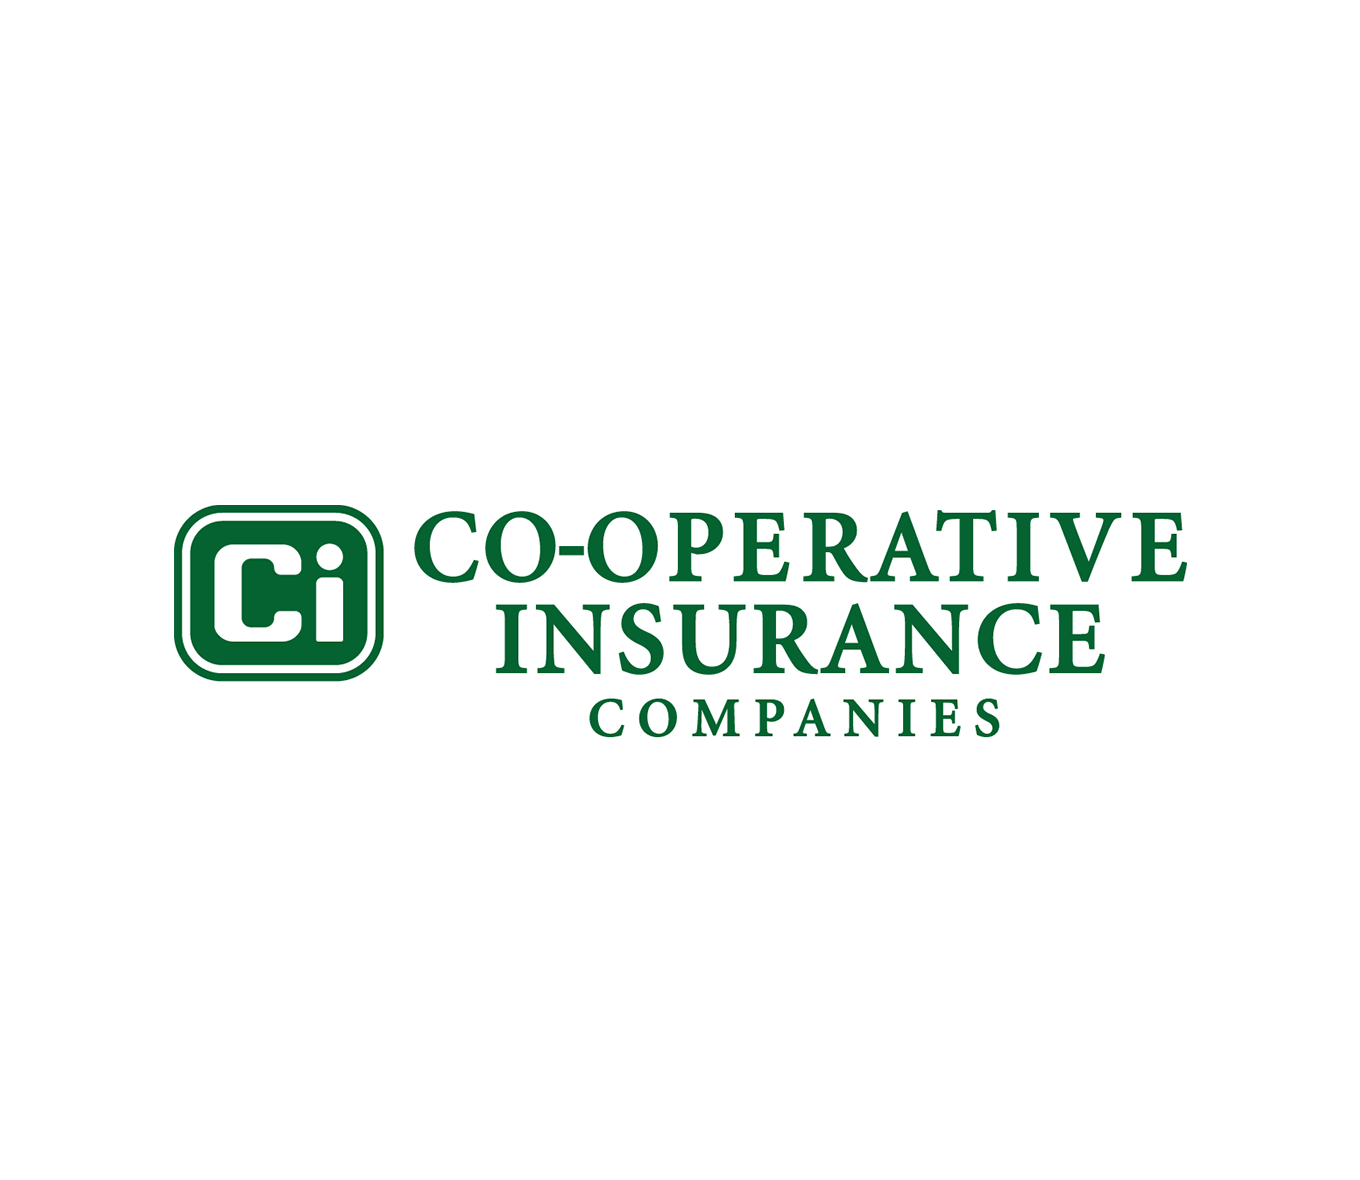 Co-operative Insurance Companies Customer Logo